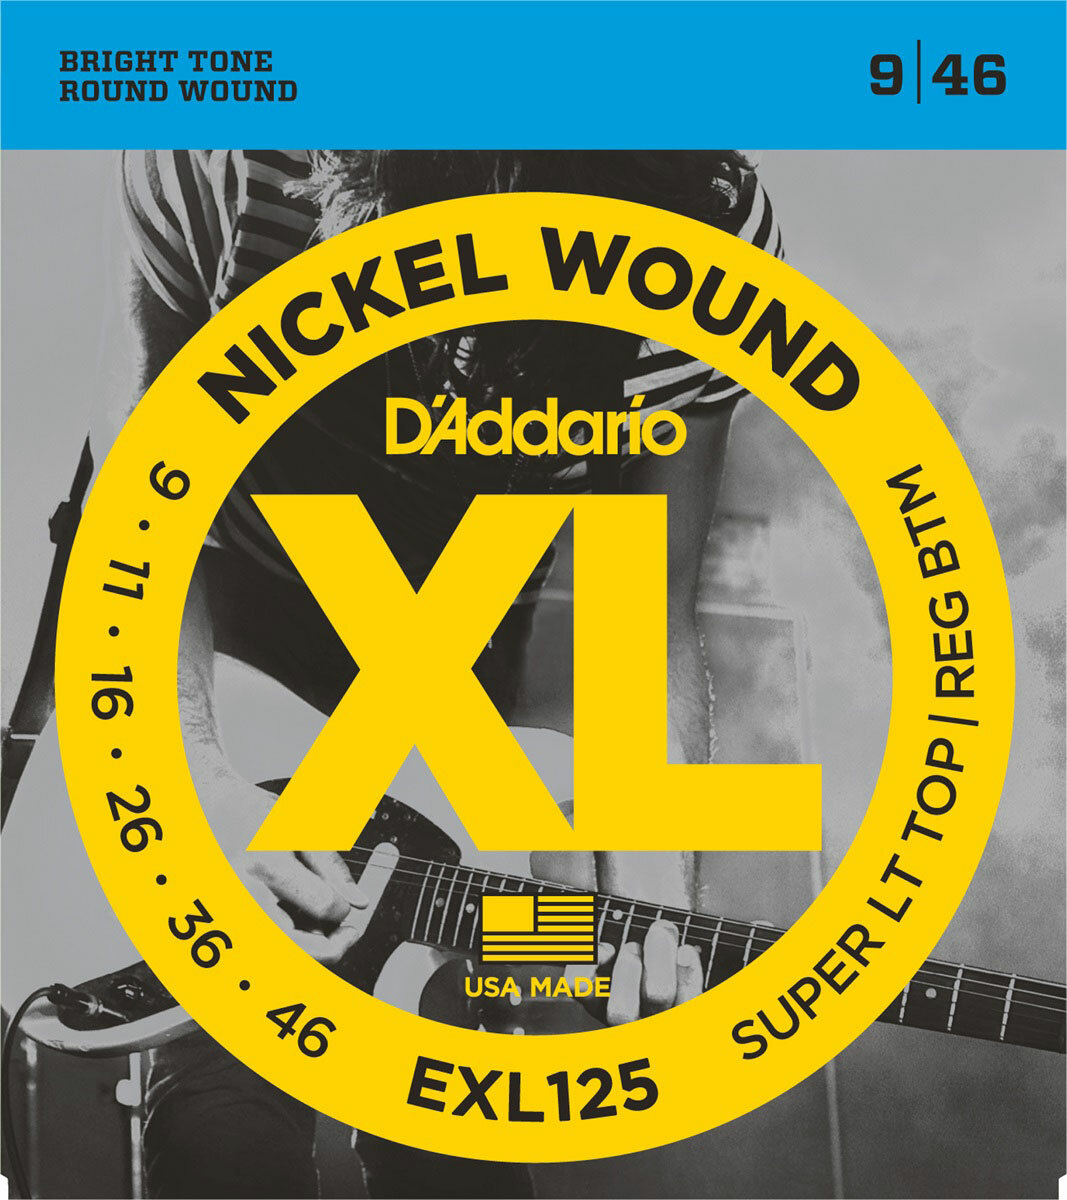 D'addario Jeu De 6 Cordes Exl125 Nickel Round Wound Sltrb 9-46 - Electric guitar strings - Main picture